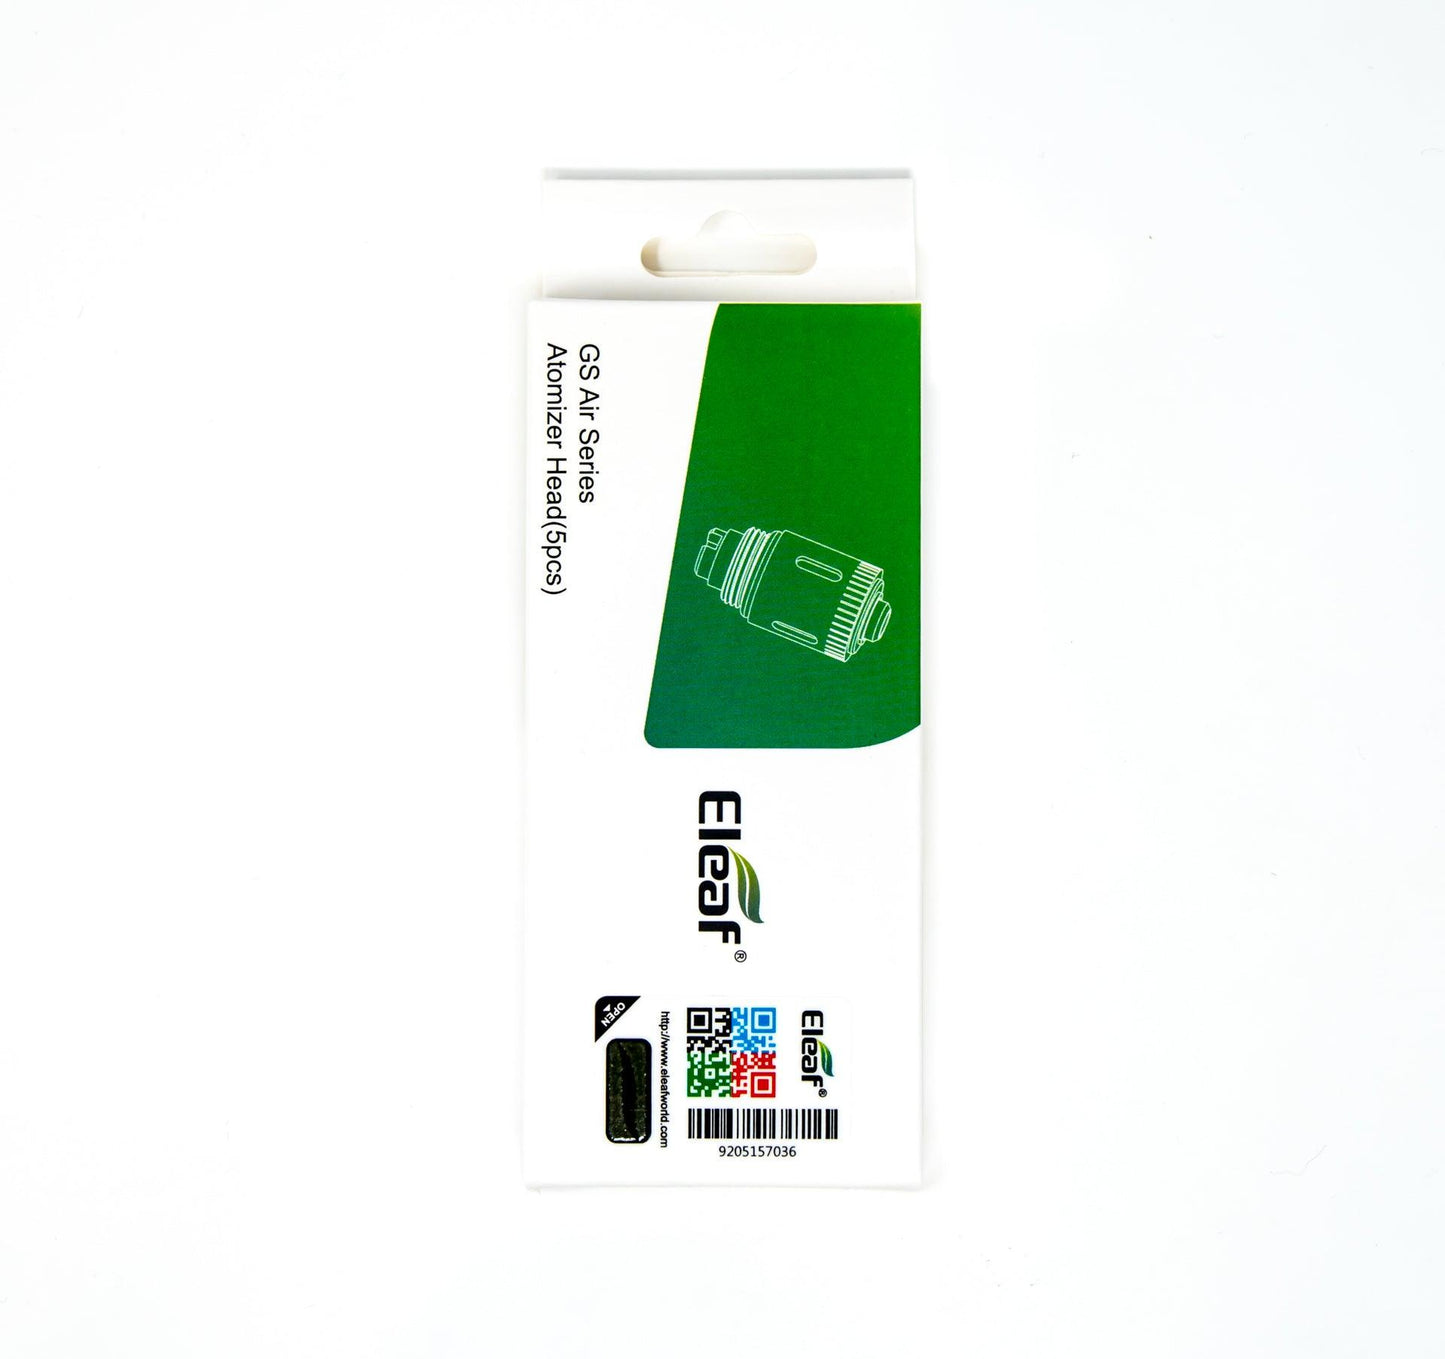 ELEAF GS AIR (TECC) COIL - Valda Vapes